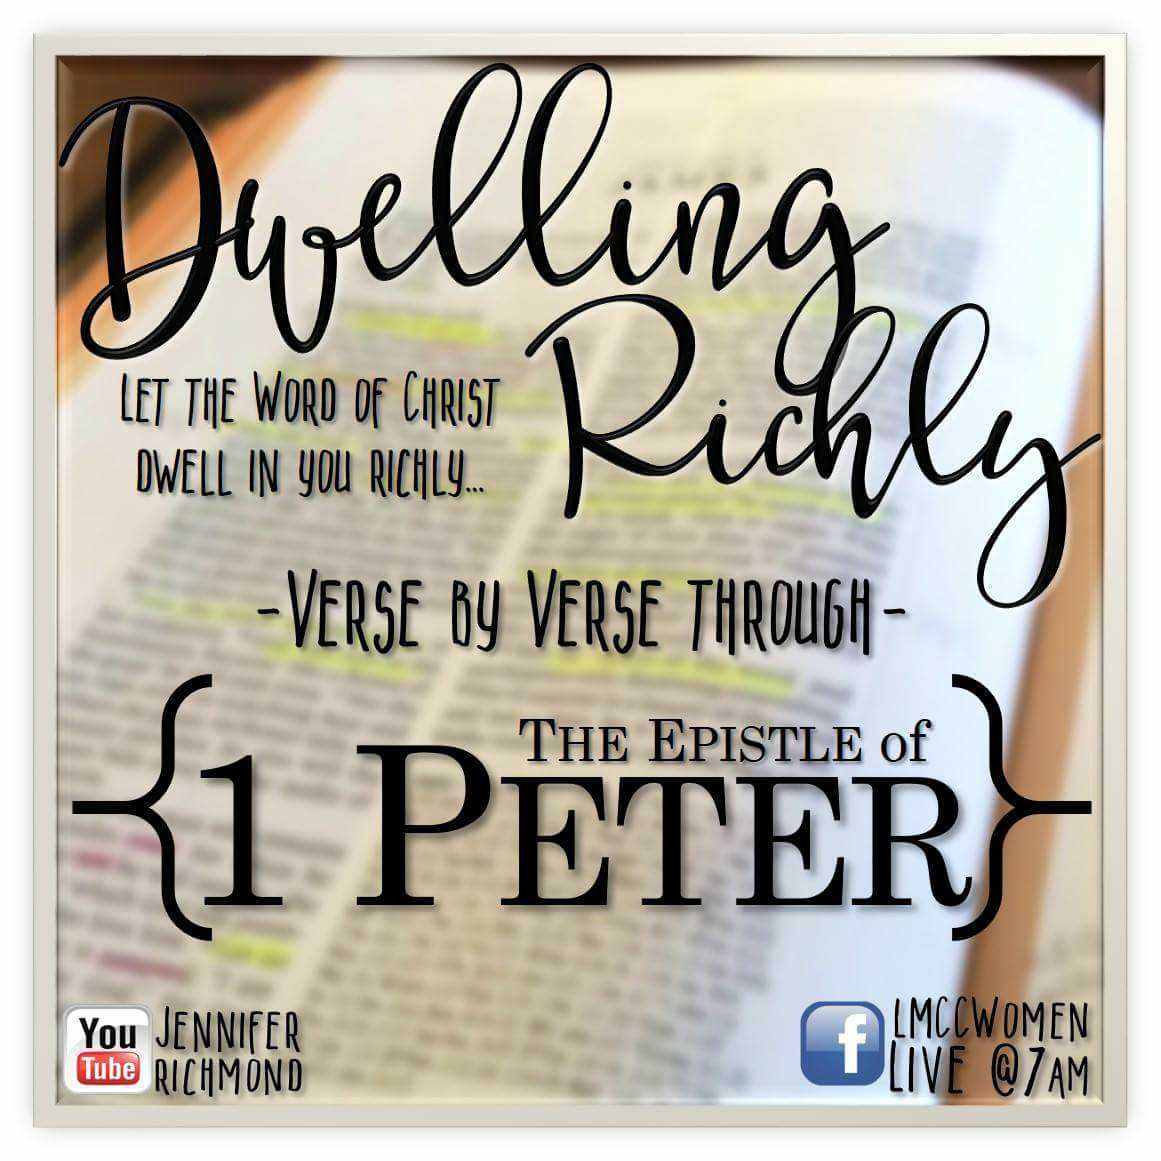 1 Peter 3:1-22